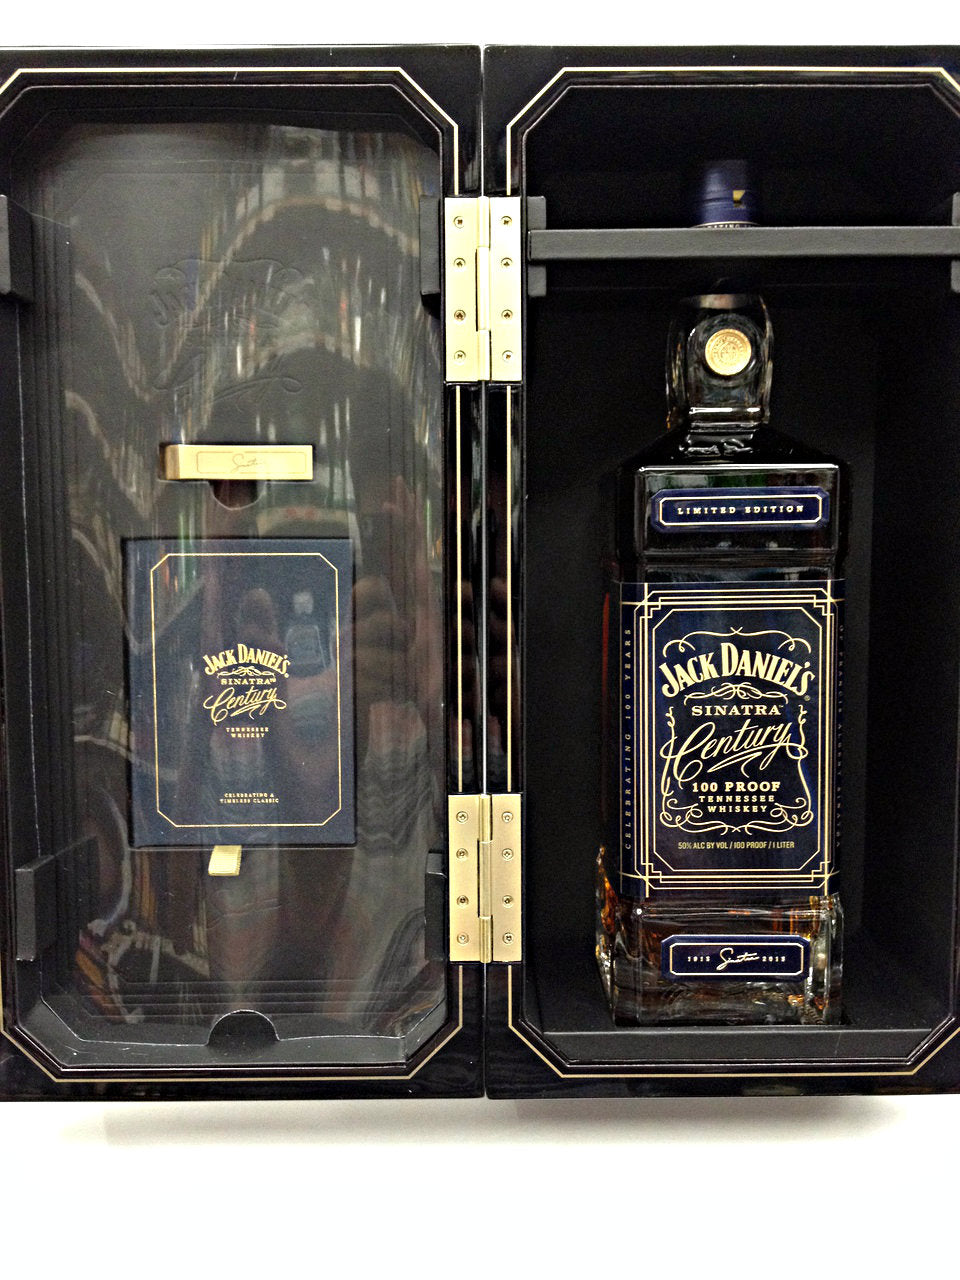 Jack Daniel's Sinatra Century - Jack Daniel's